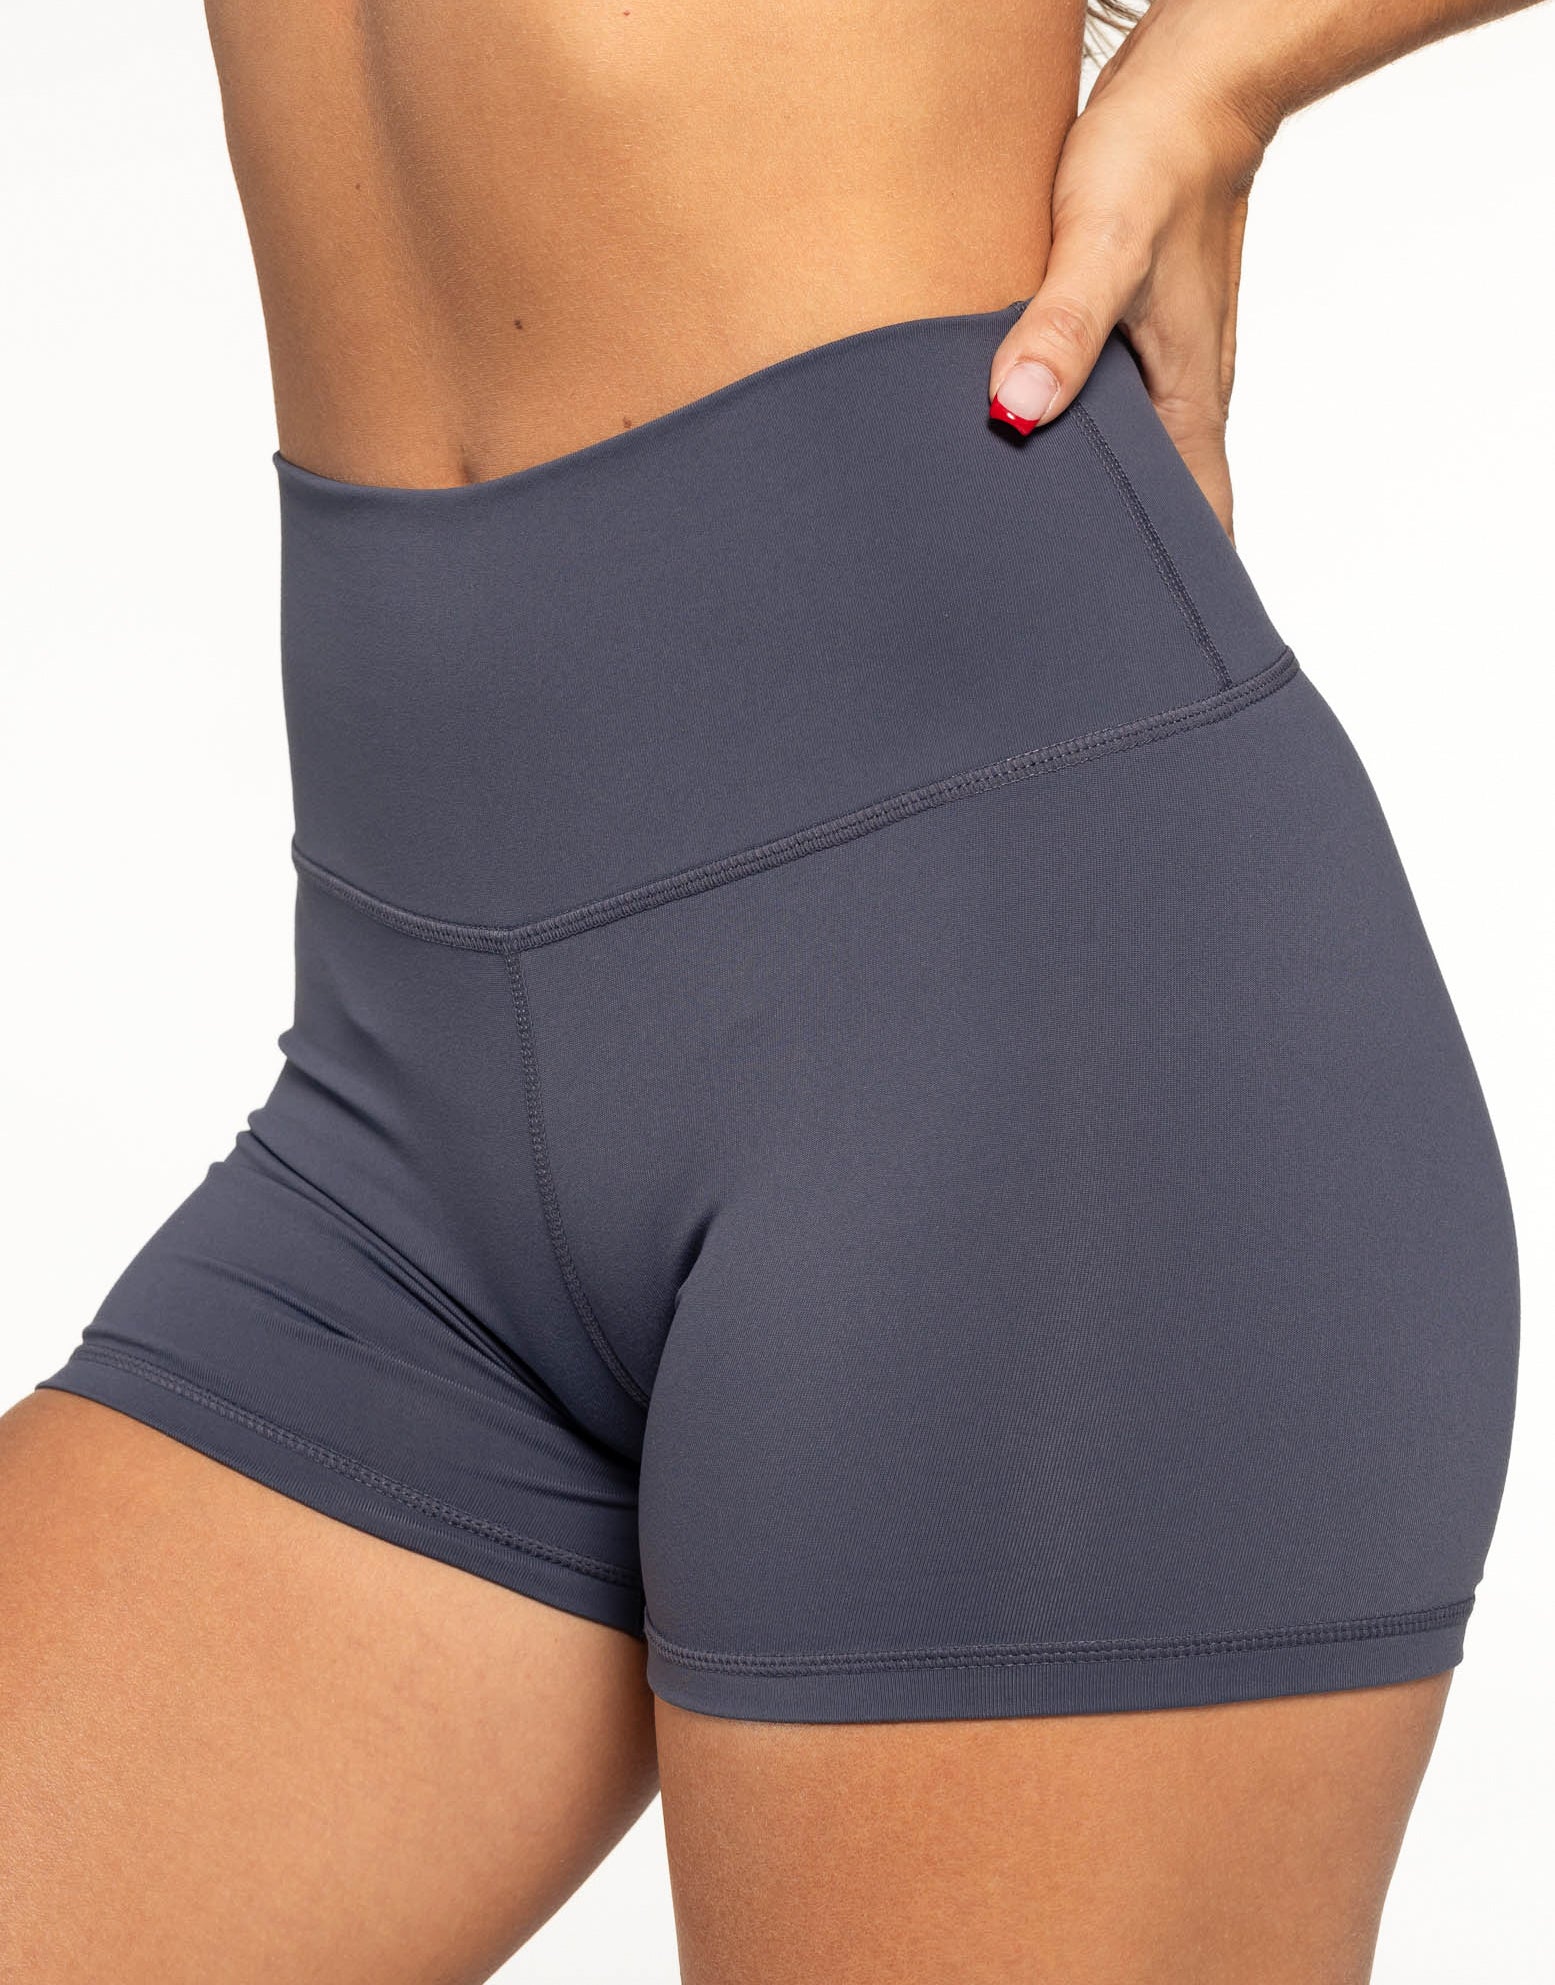 Force Scrunch Shorts, Perfect Scrunch Bum Shorts